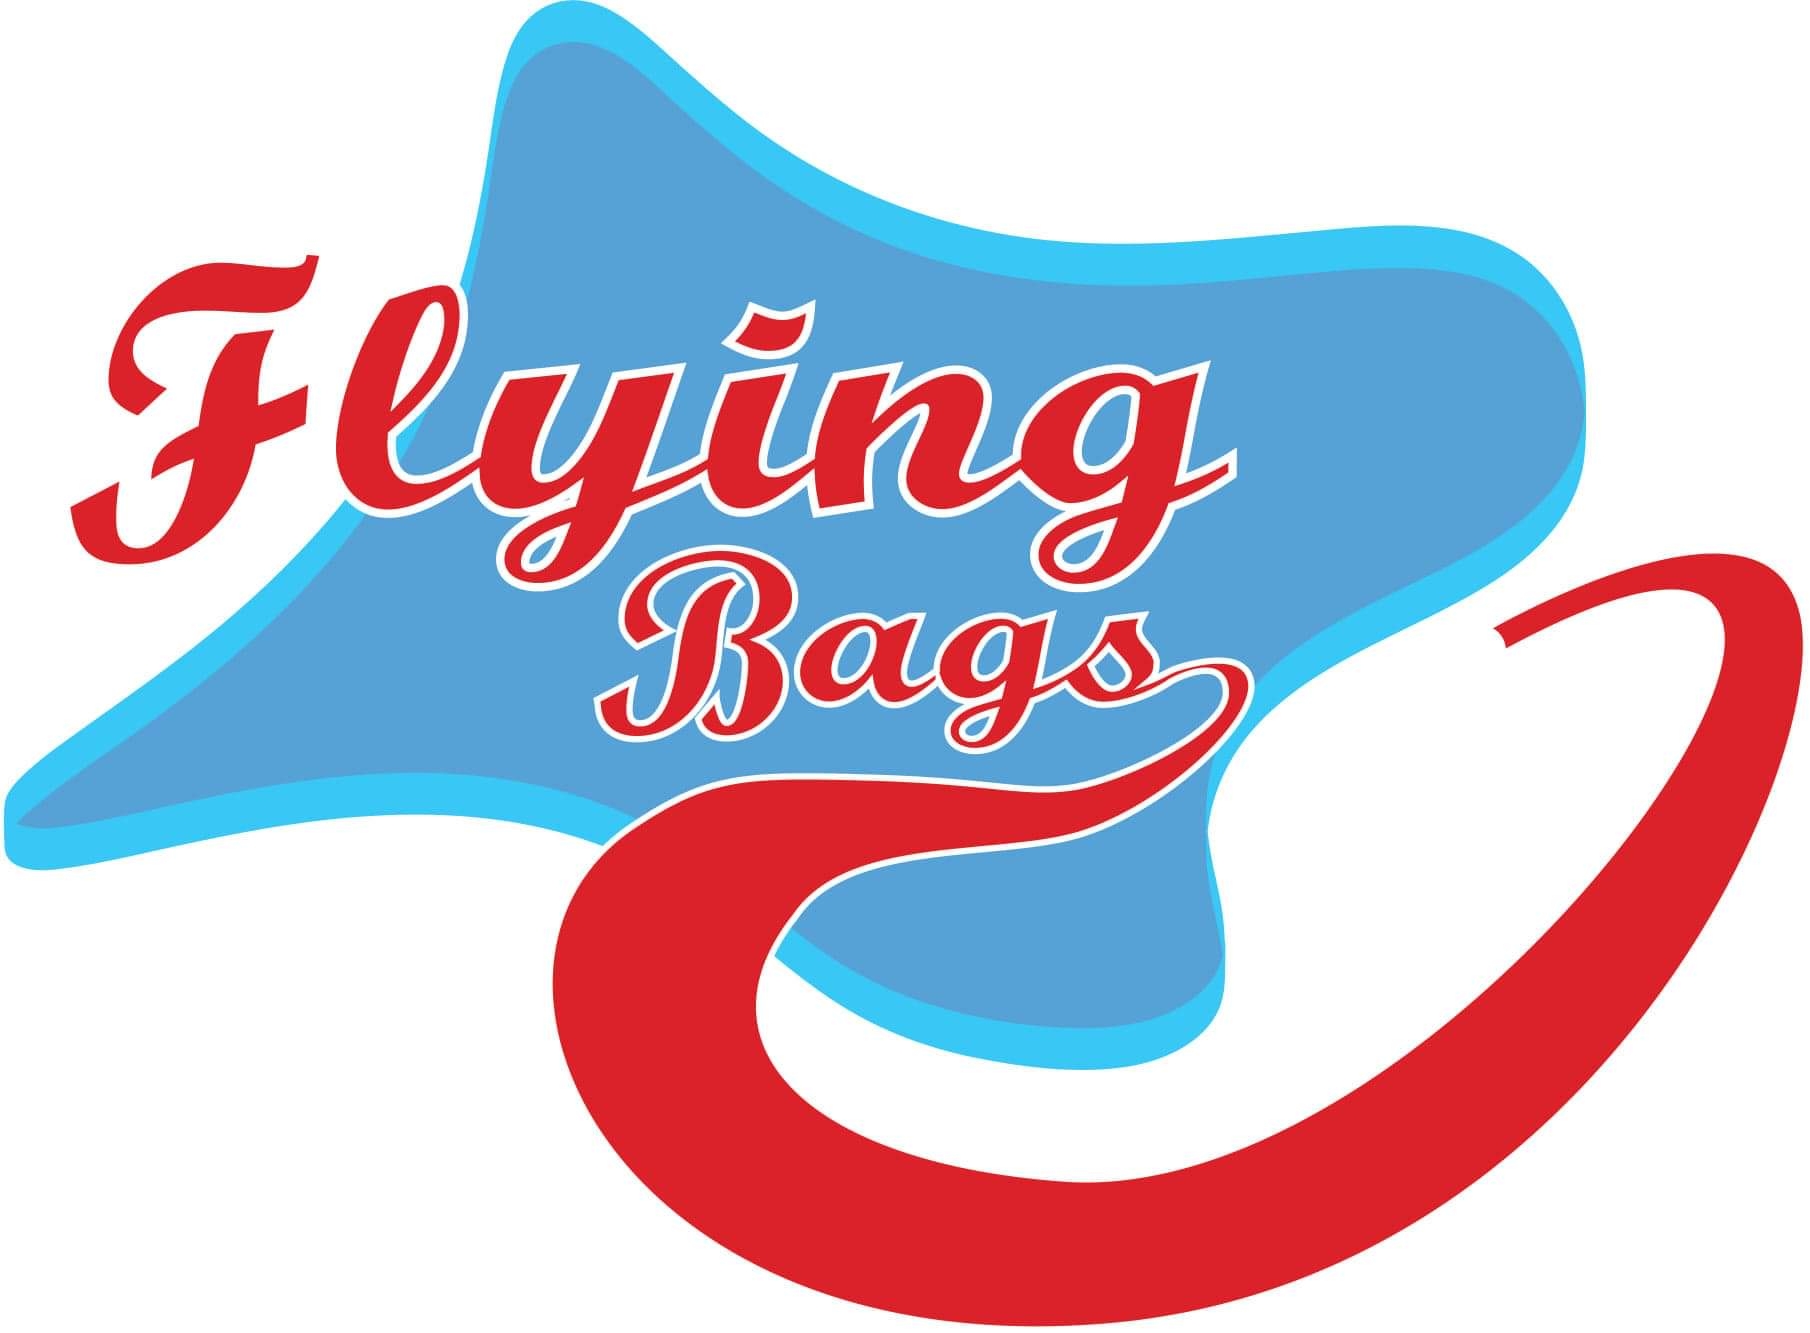 Flying Bags